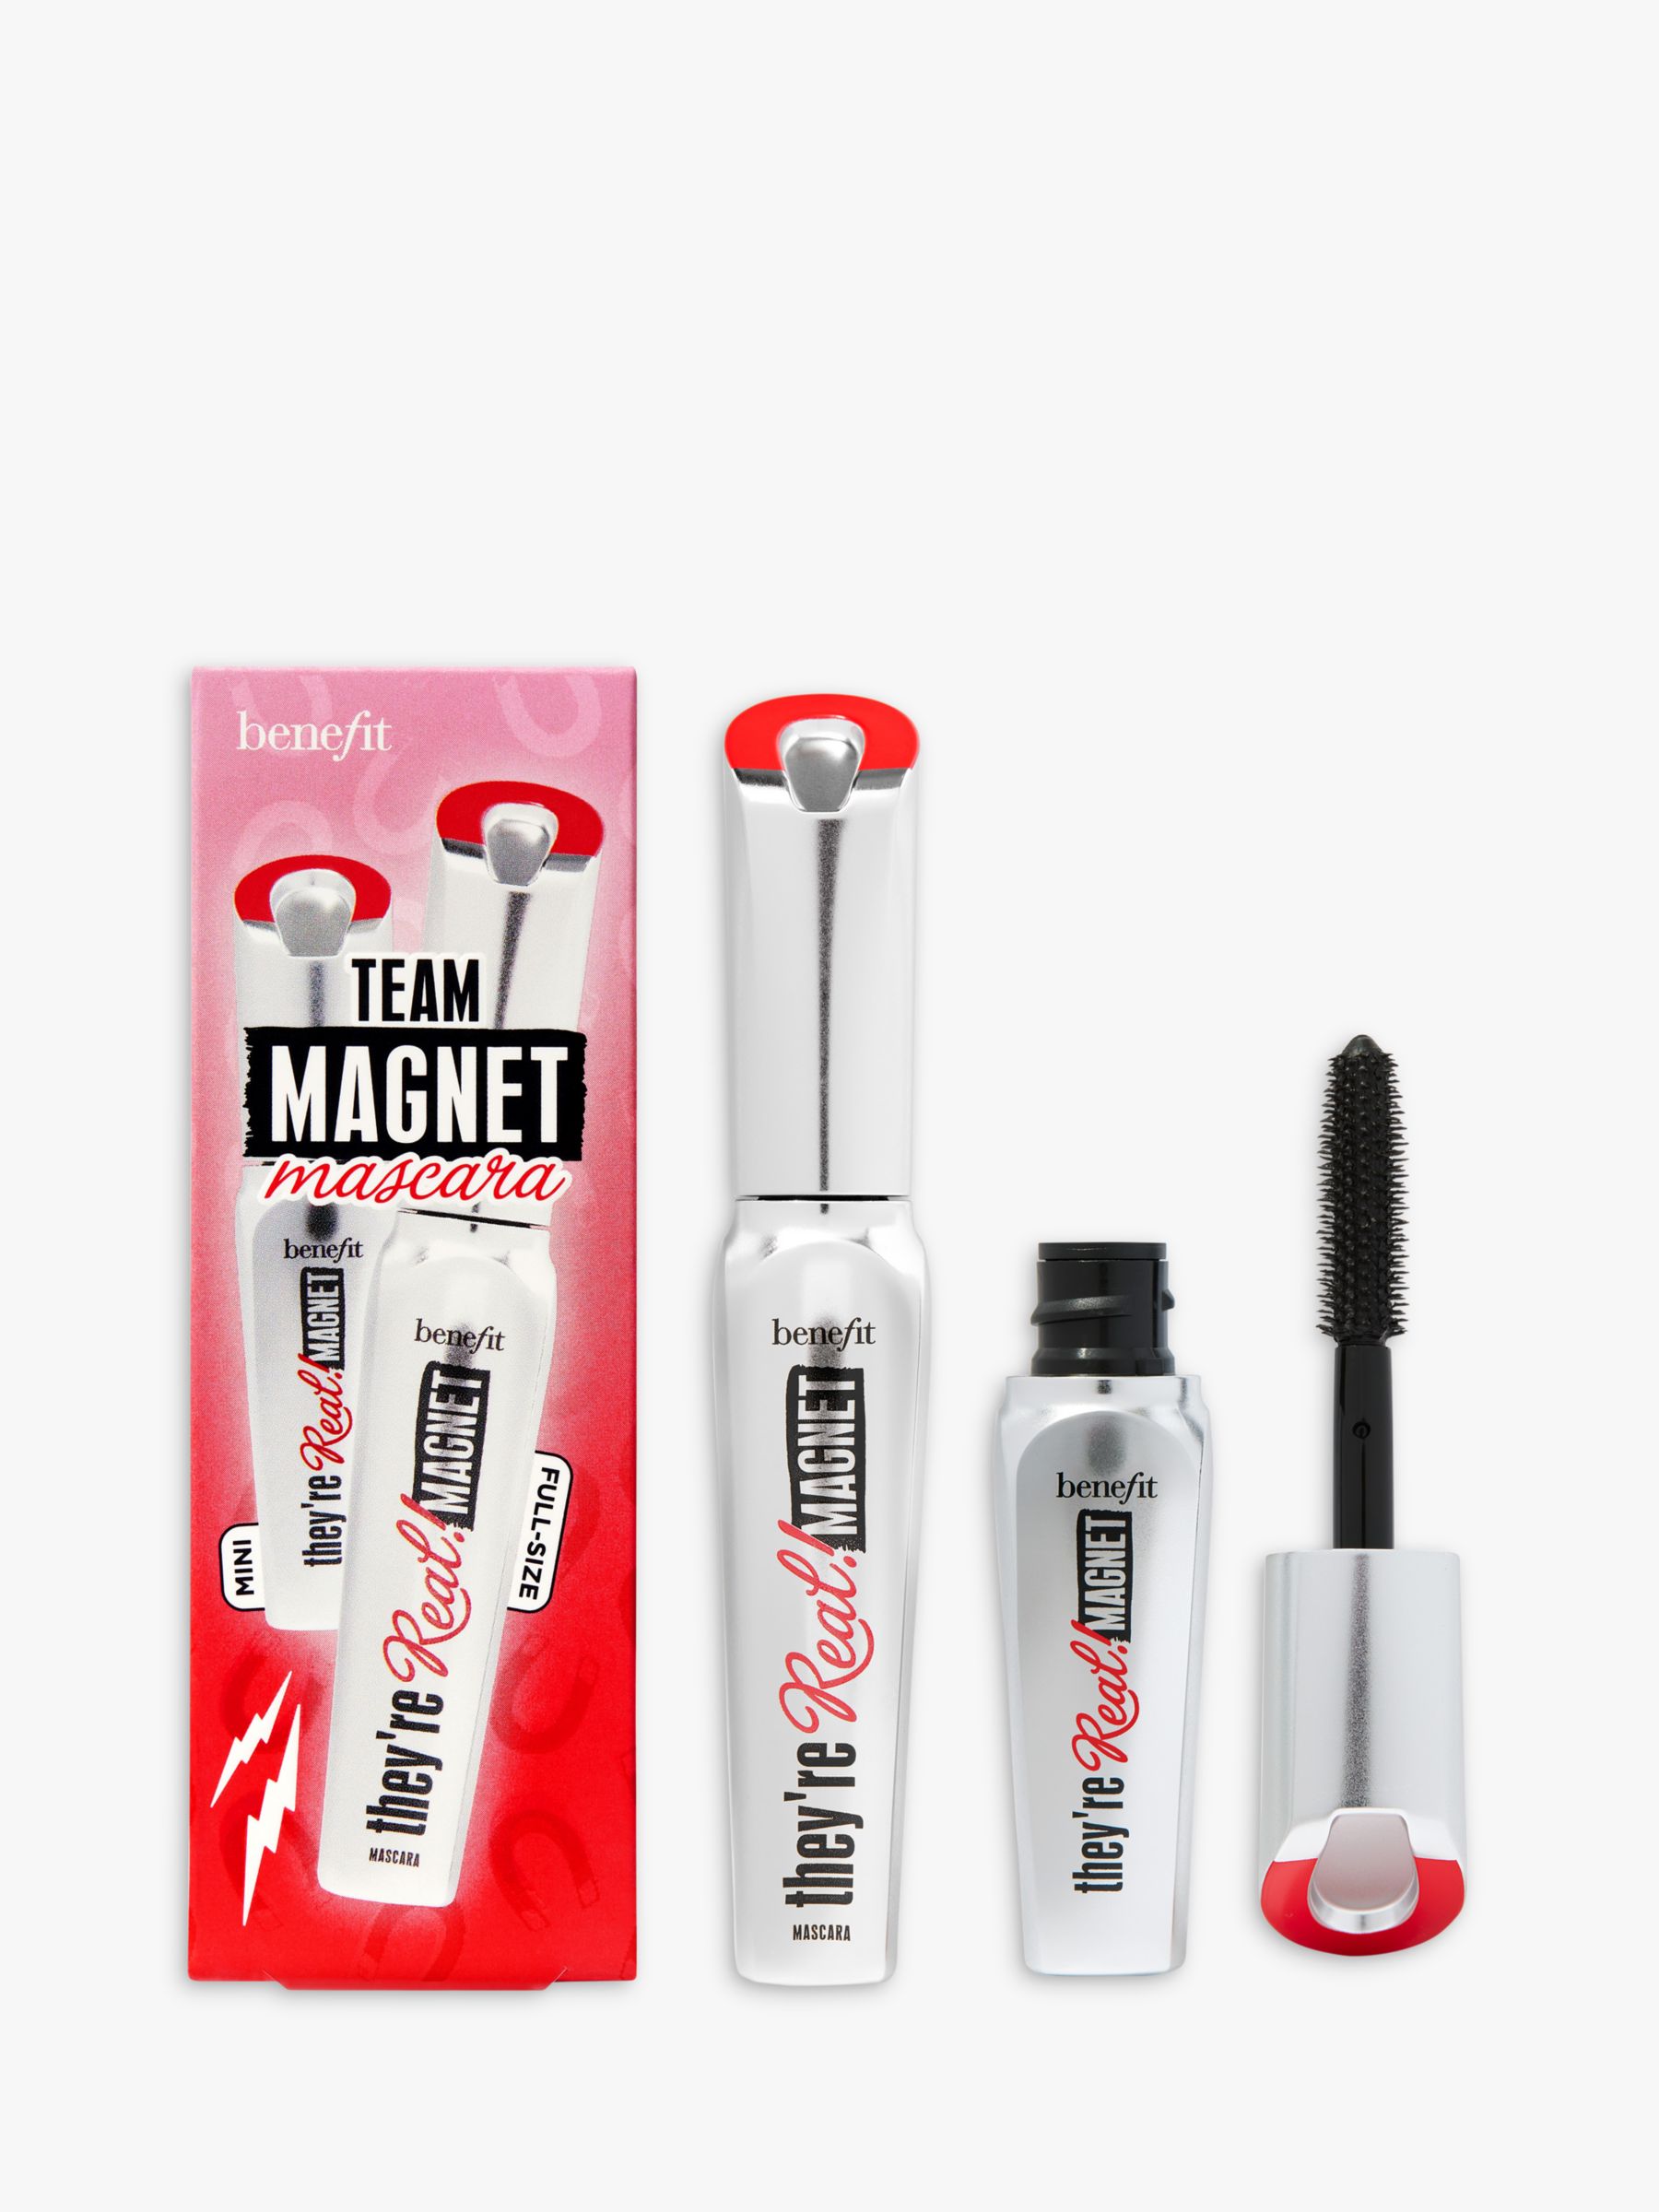 Benefit Team Magnet Mascara Makeup Gift Set 1